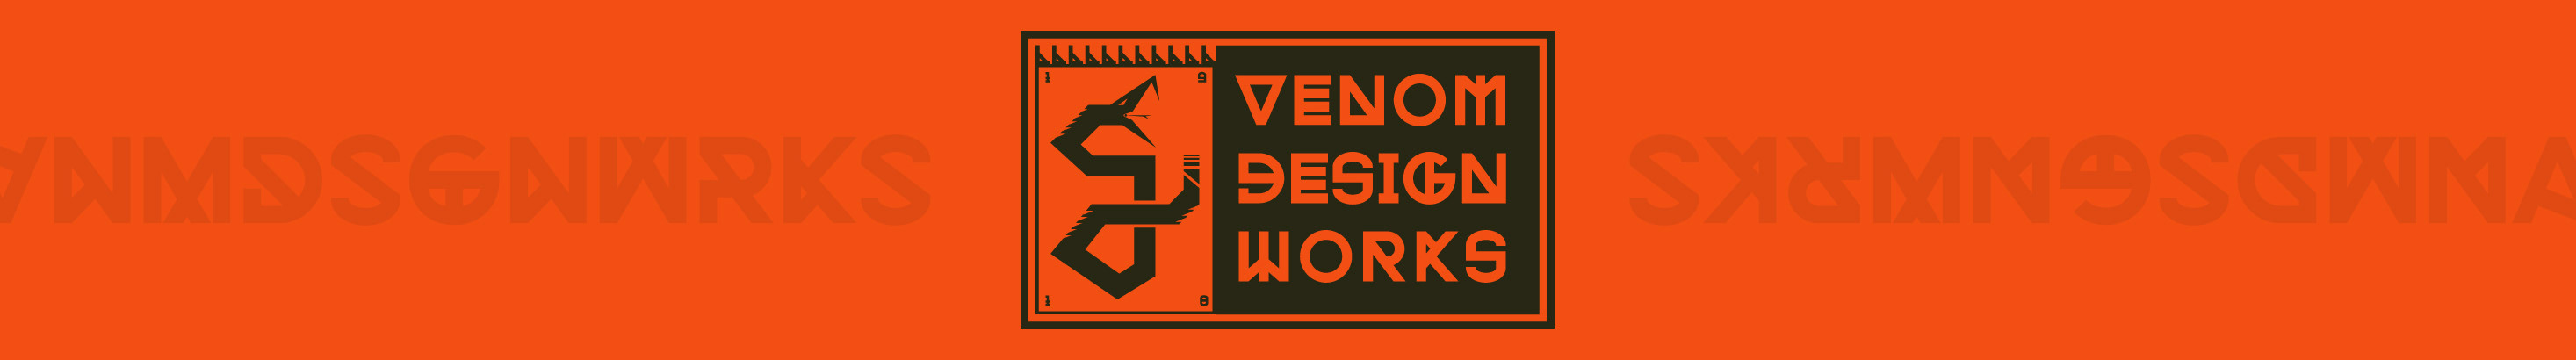 Banner de perfil de Venom Design Works -